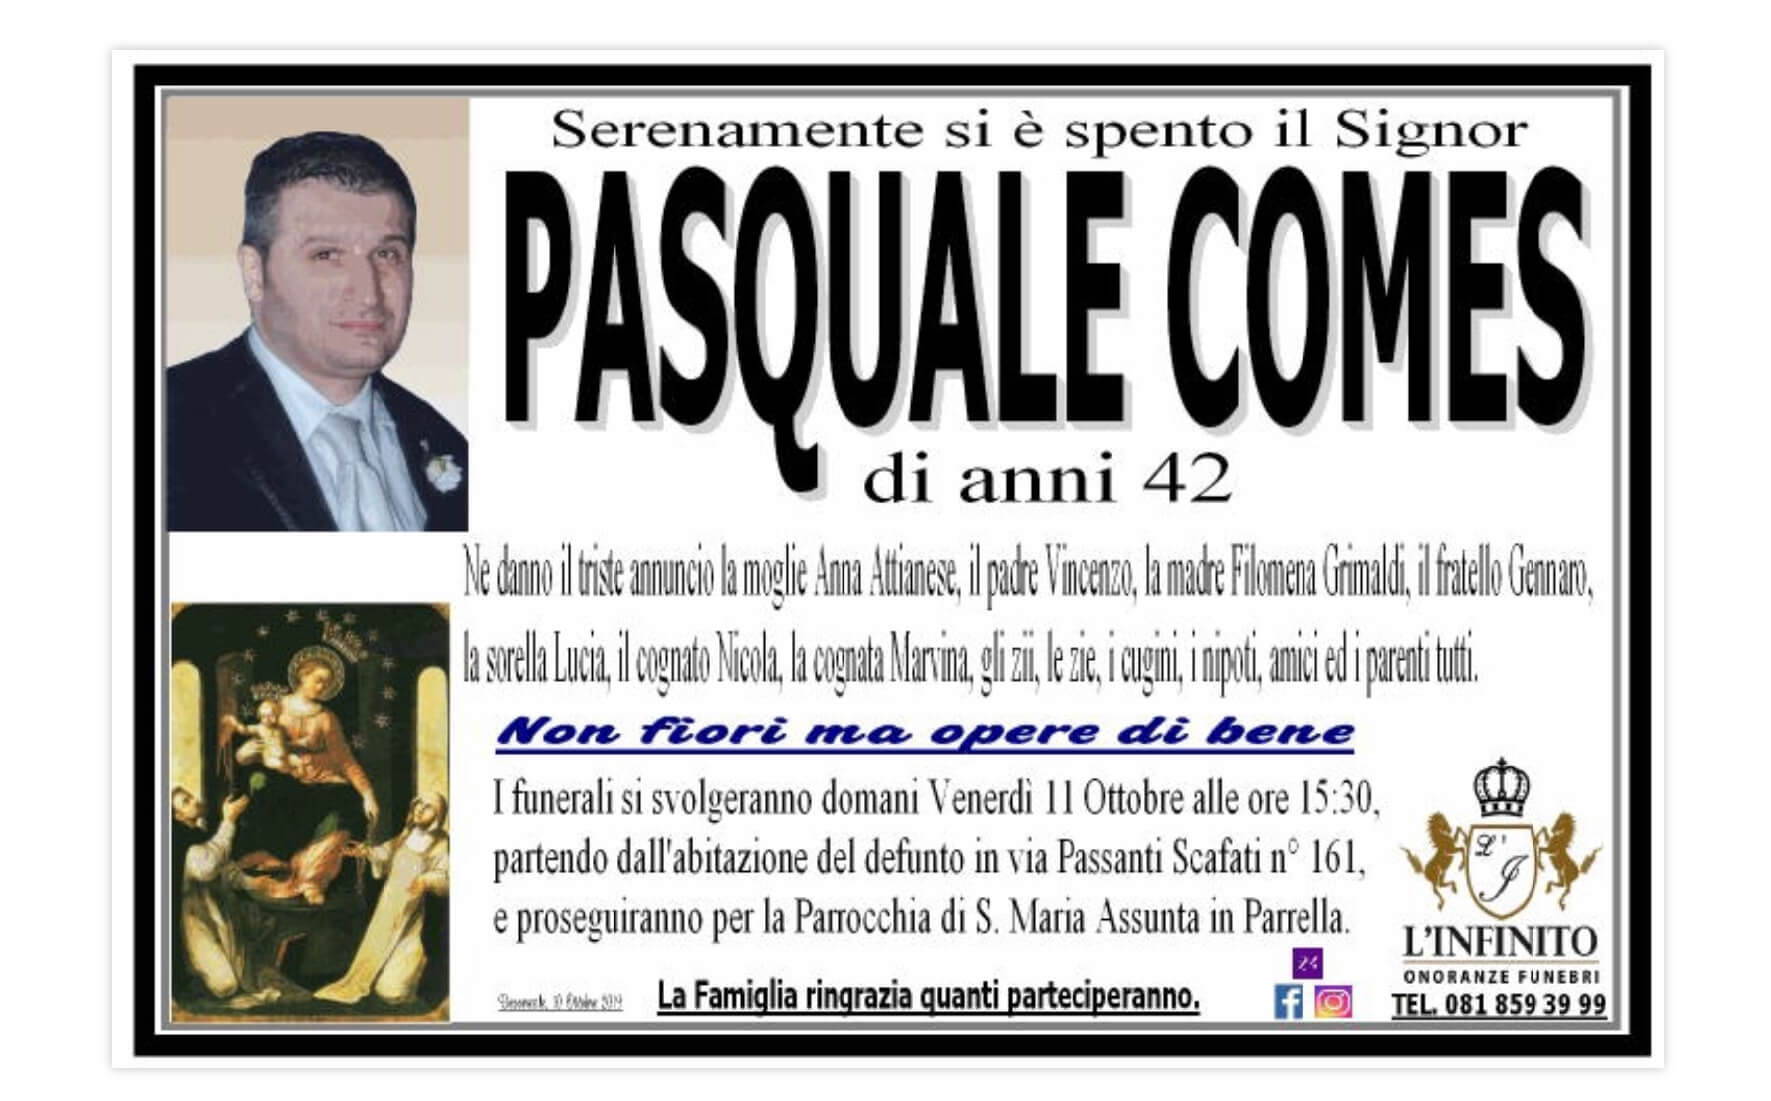 Pasquale Comes